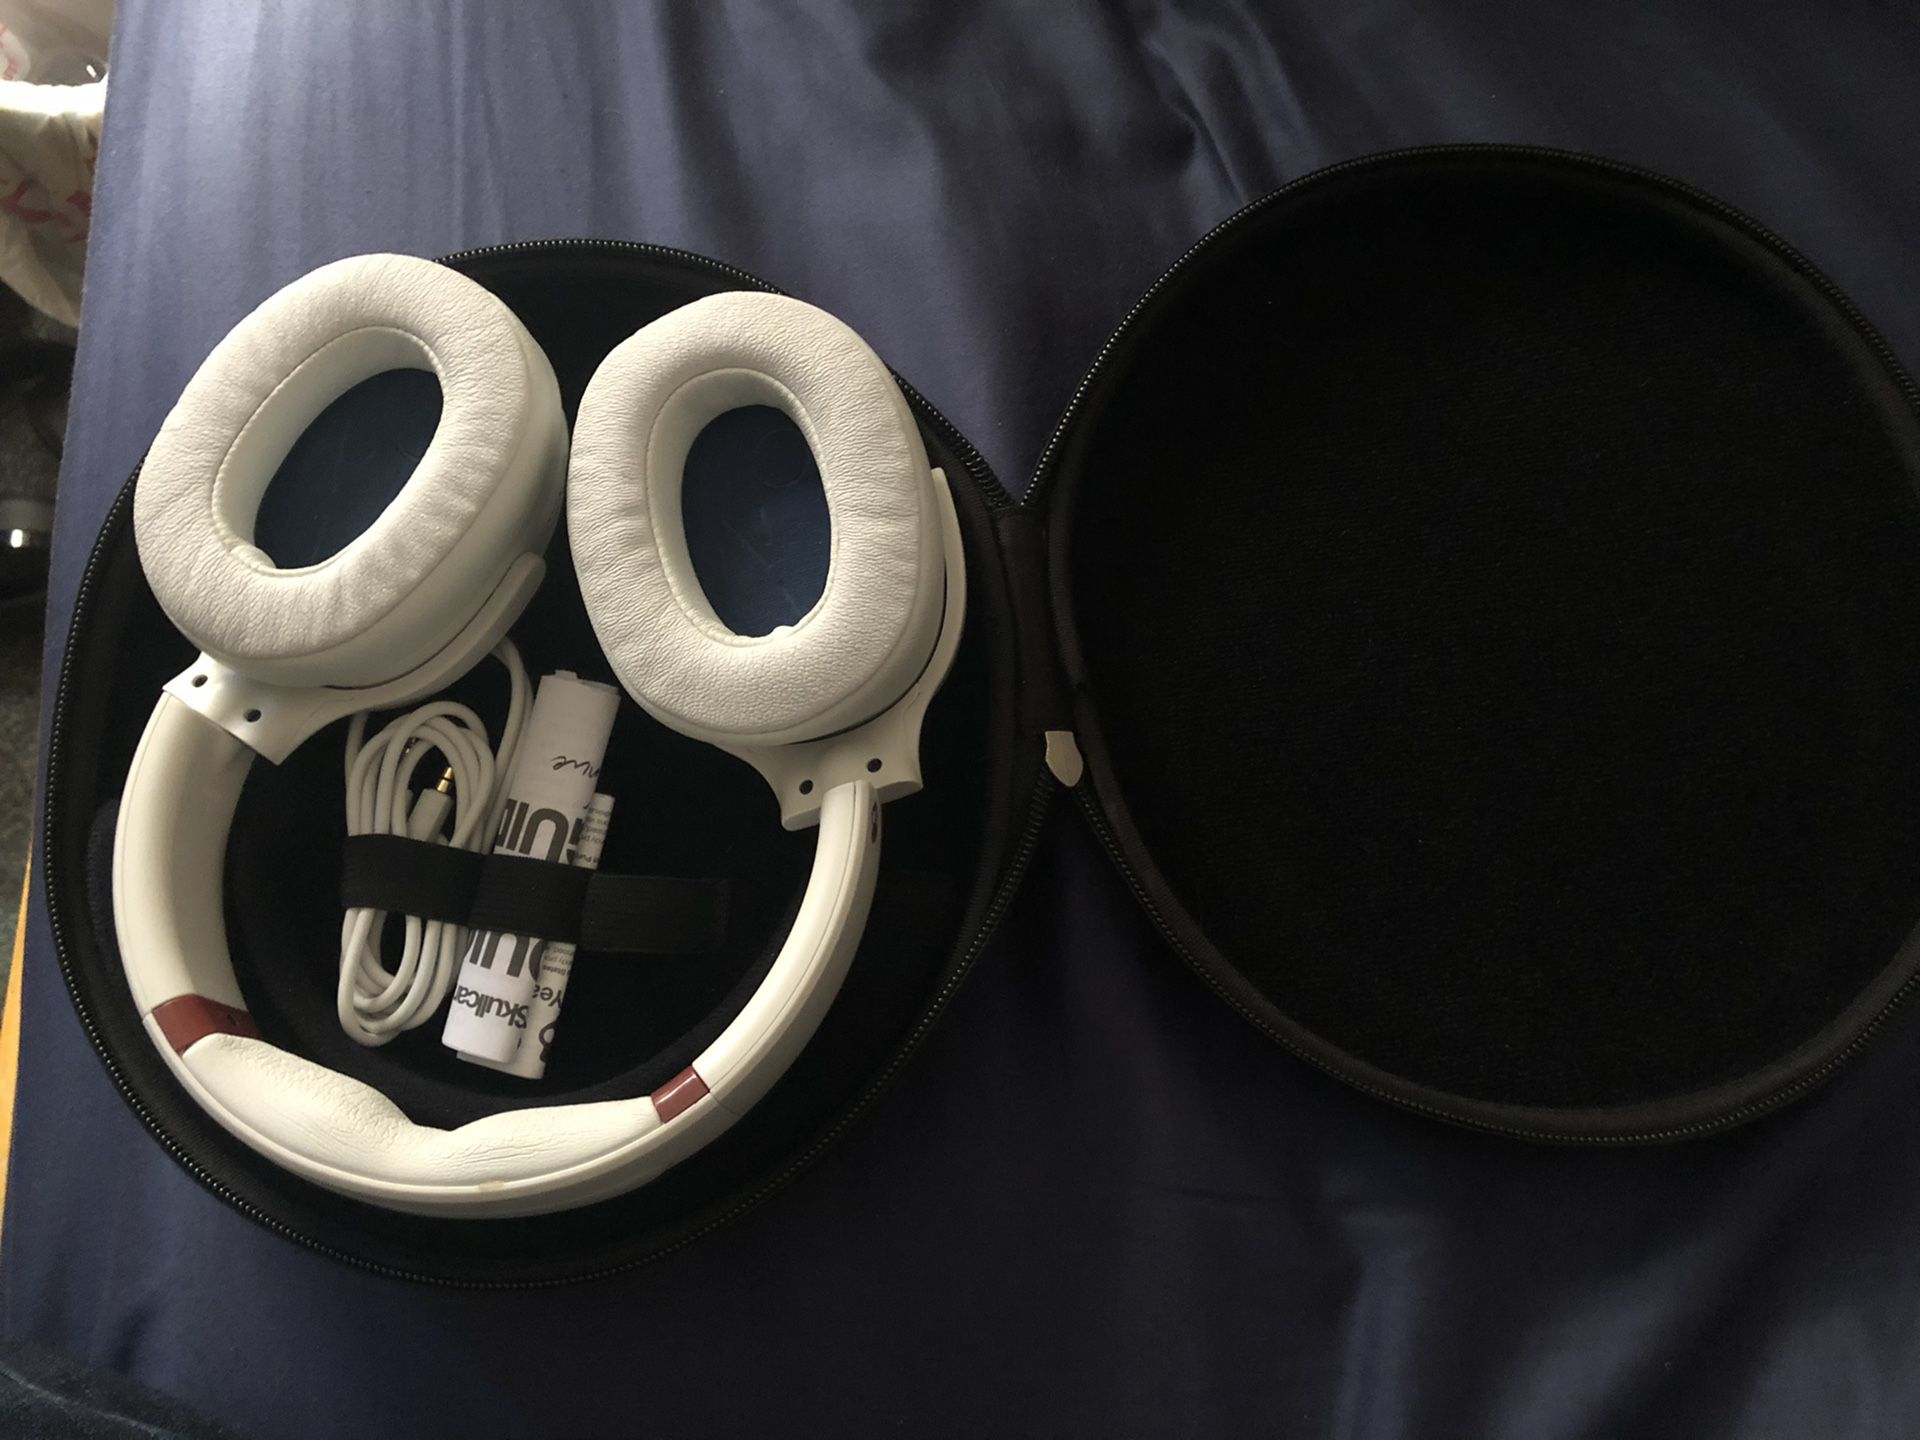 Skull candy headphones